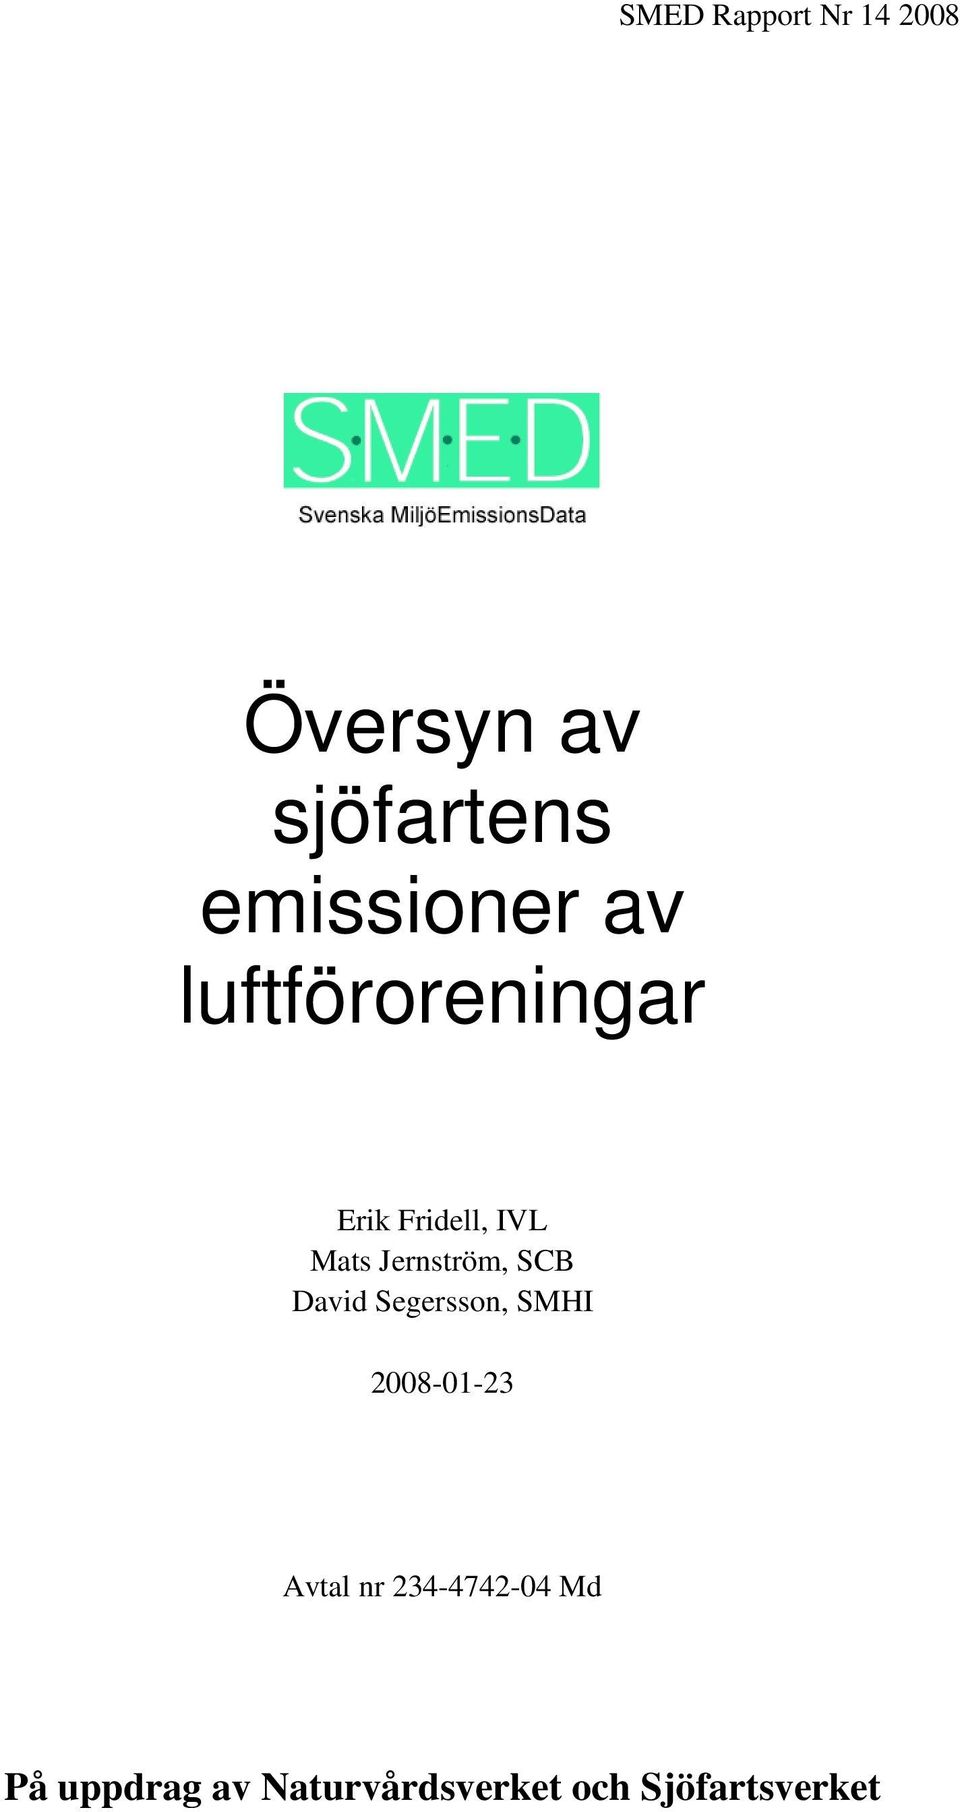 Jernström, SCB David Segersson, SMHI 2008-01-23 Avtal